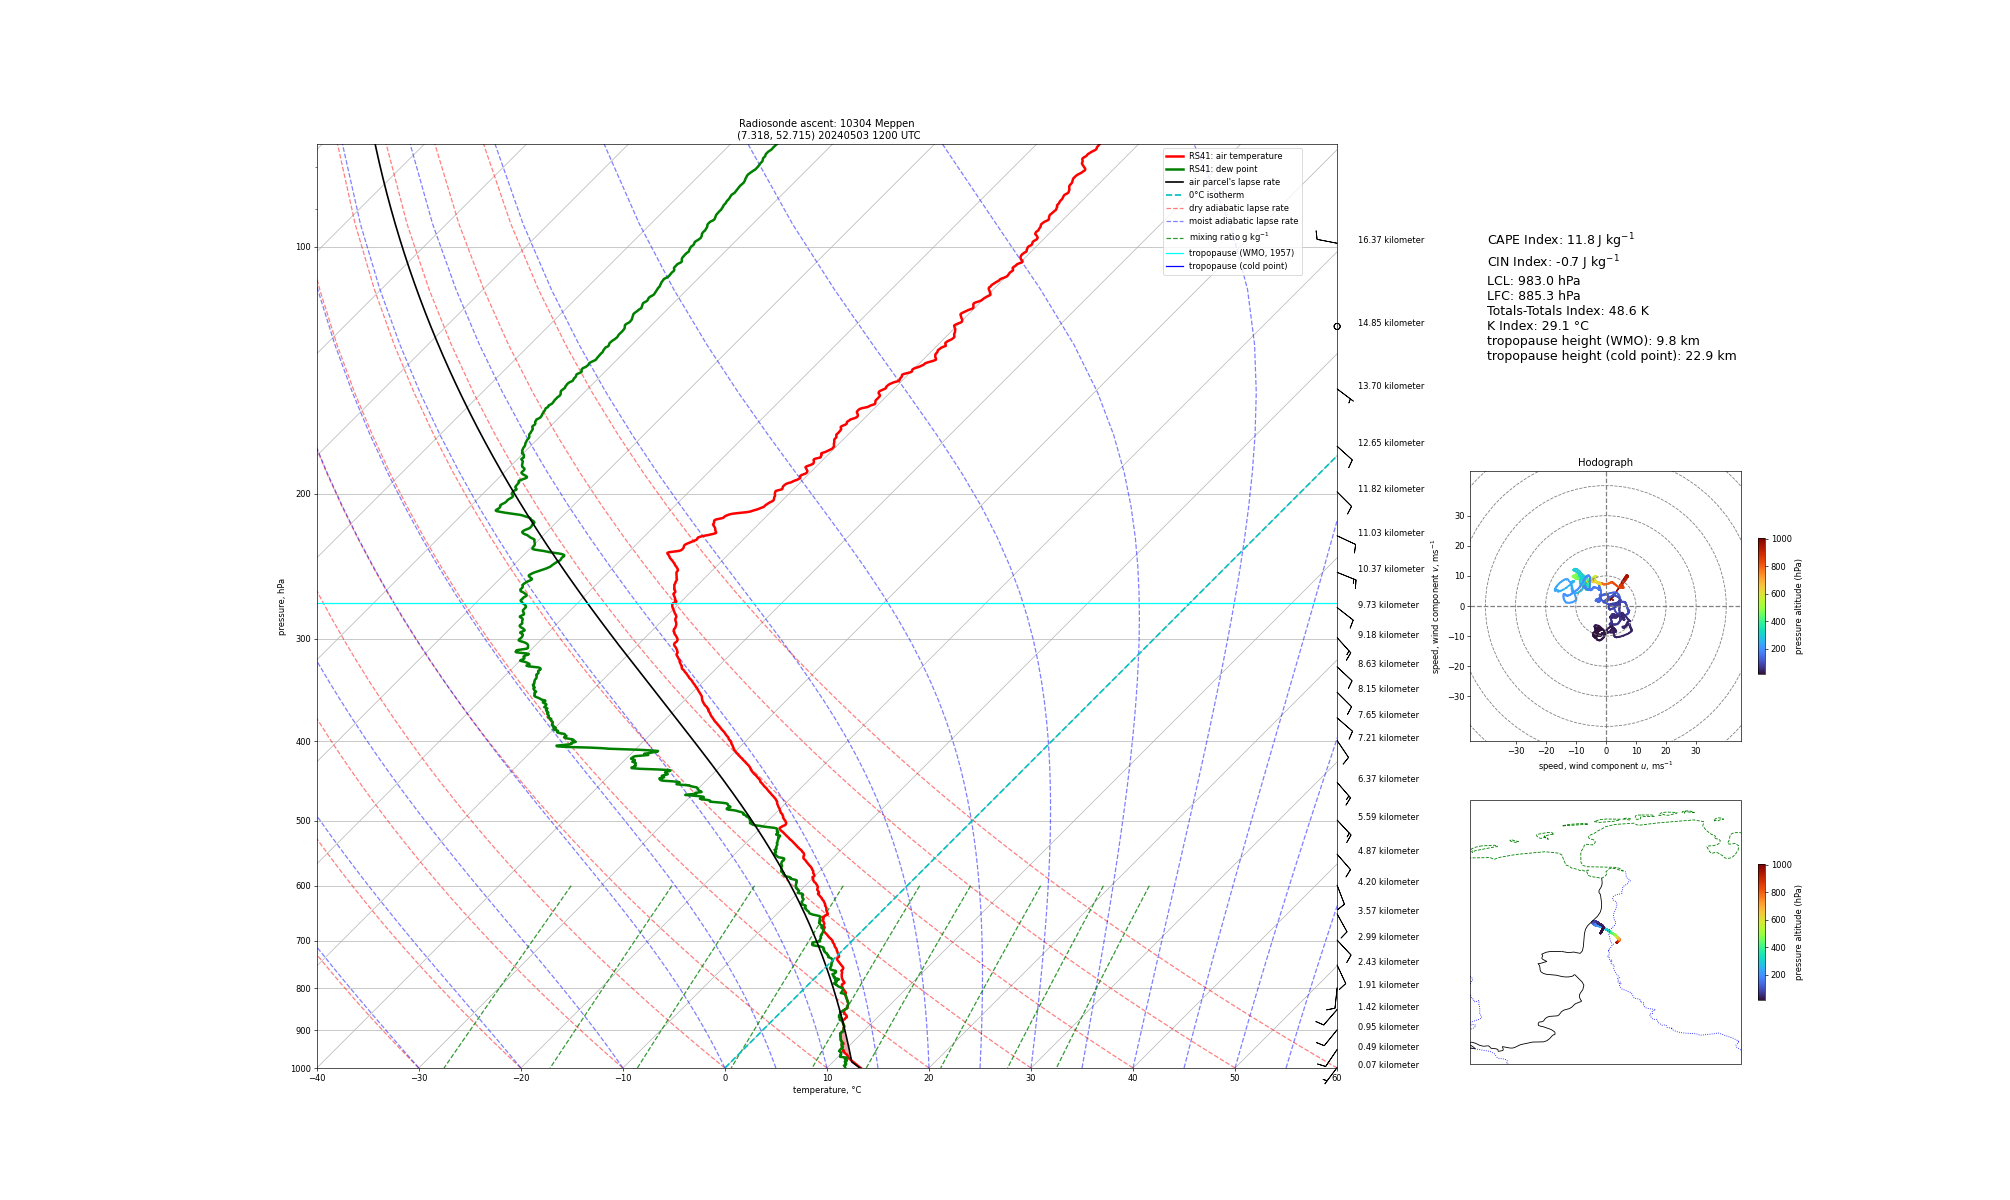 Visualisation of the radiosounding profile at Meppen at 1200 UTC